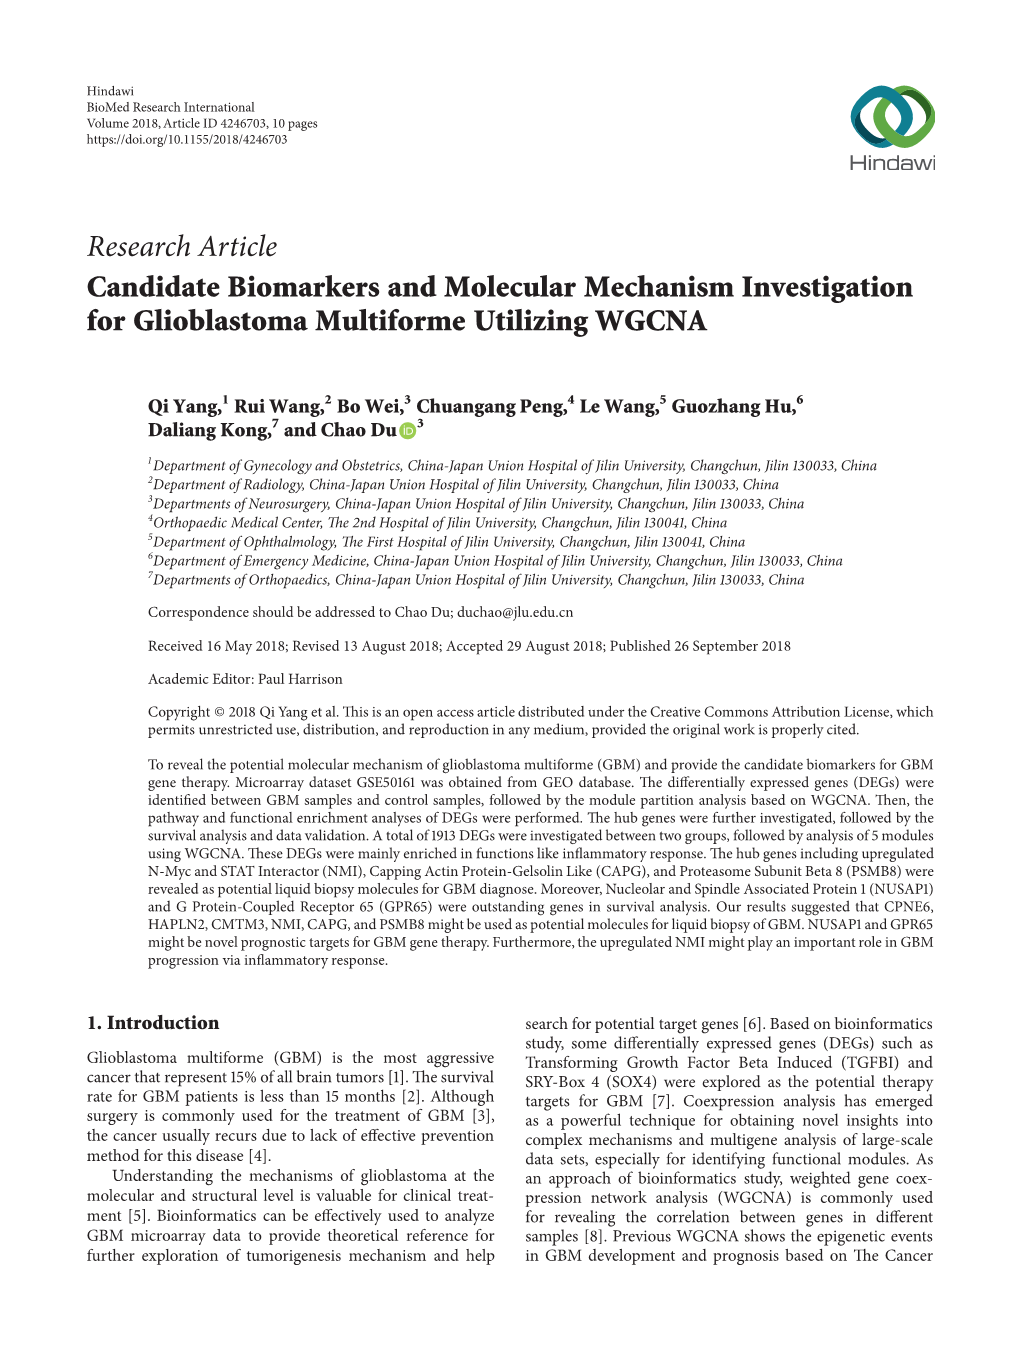 Candidate Biomarkers and Molecular Mechanism Investigation for Glioblastoma Multiforme Utilizing WGCNA